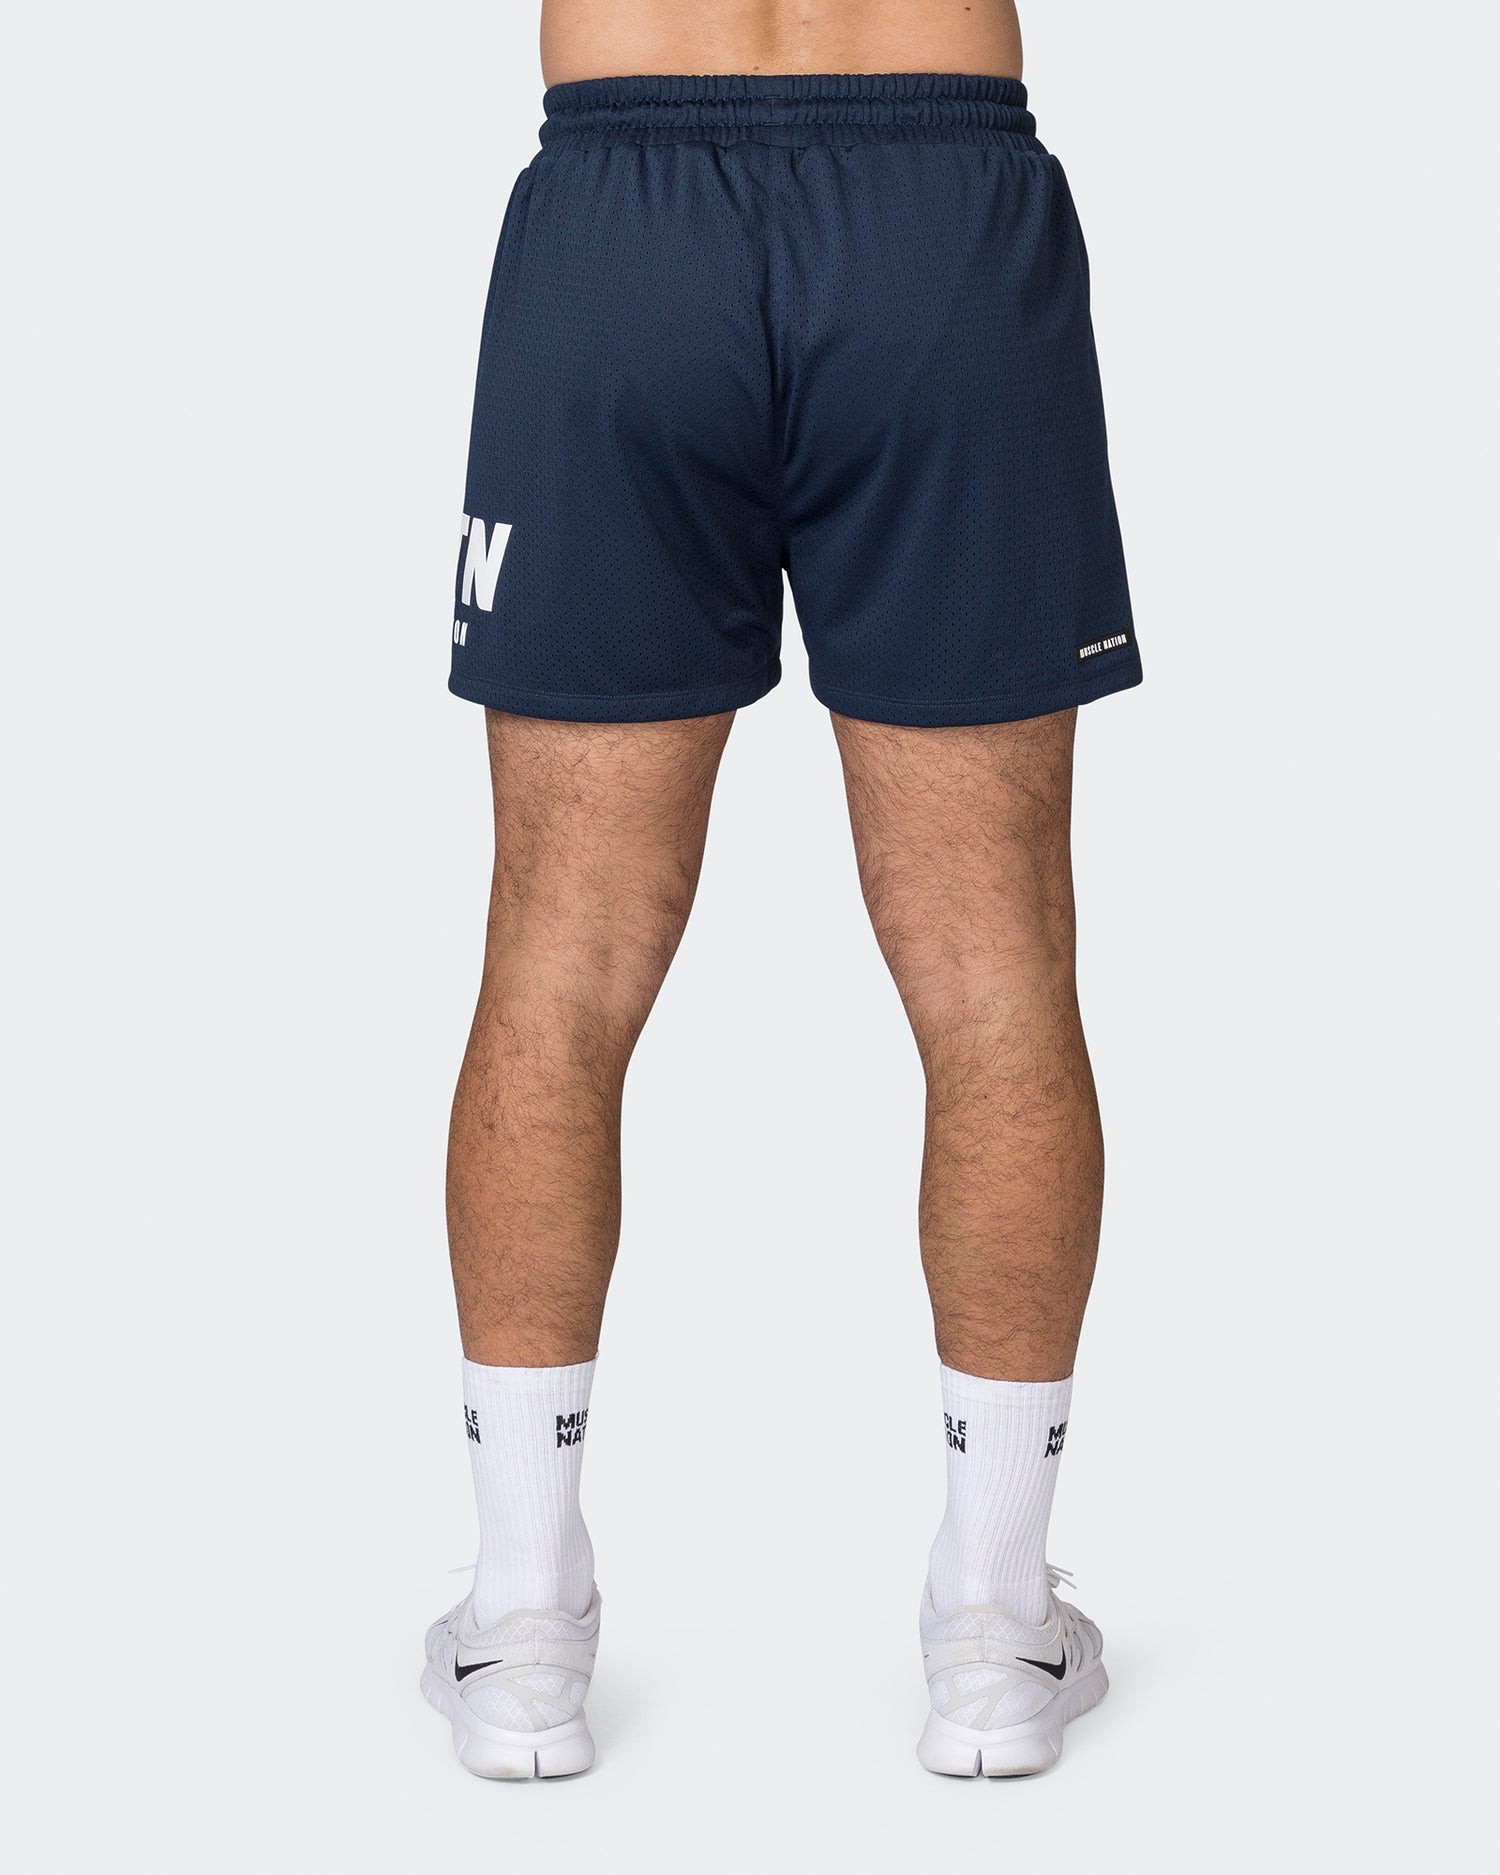 MNTN Lay Up 3.5" Shorts - Odyssey